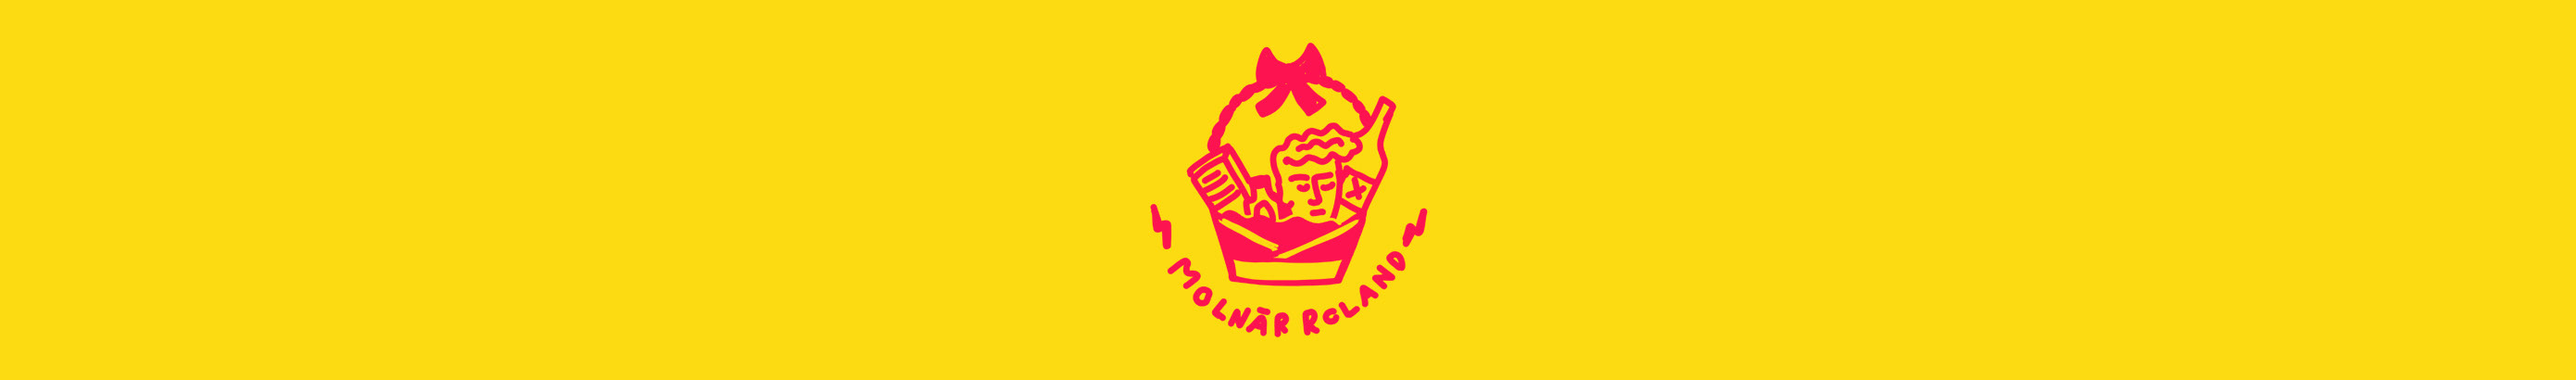 Molnár Roland's profile banner